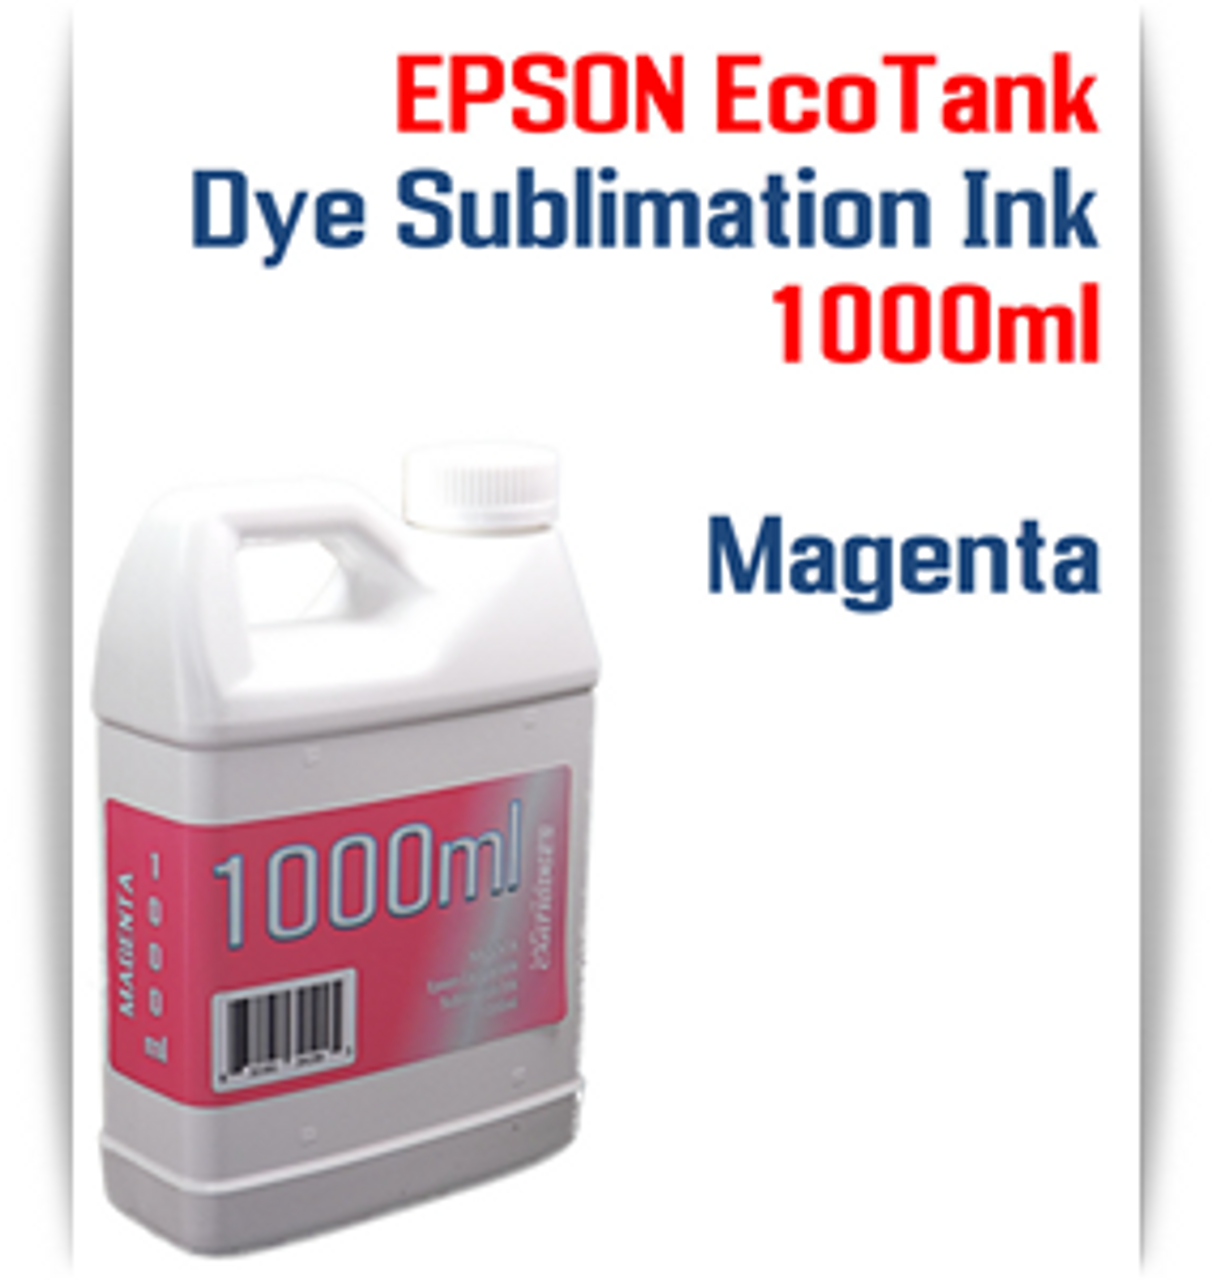 Magenta EPSON EcoTank printer Dye Sublimation Ink 1000ml bottle

EPSON Expression ET-2500 EcoTank Printer, EPSON Expression ET-2550 EcoTank Printer, EPSON Expression ET-2600 EcoTank Printer, EPSON Expression ET-2650 EcoTank Printer, EPSON Expression ET-2700 EcoTank Printer, EPSON Expression ET-2750 EcoTank Printer, EPSON Expression ET-3600 EcoTank Printer, EPSON Expression ET-3700 EcoTank Printer

EPSON WorkForce ET-3750 EcoTank Printer, EPSON WorkForce ET-4500 EcoTank Printer, EPSON WorkForce ET-4550 EcoTank Printer, EPSON WorkForce ET-4750 EcoTank Printer, EPSON WorkForce ET-16500 EcoTank Printer